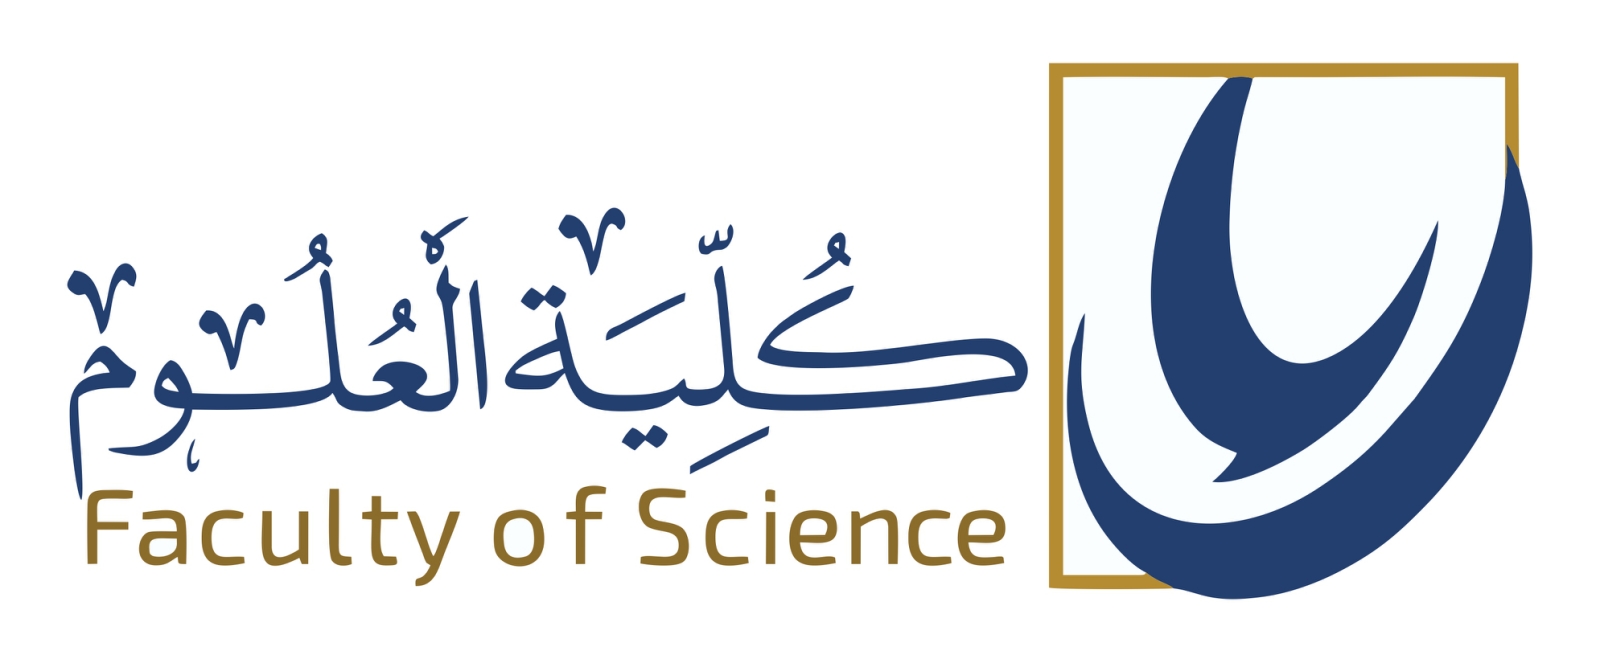  Faculty of Science platform